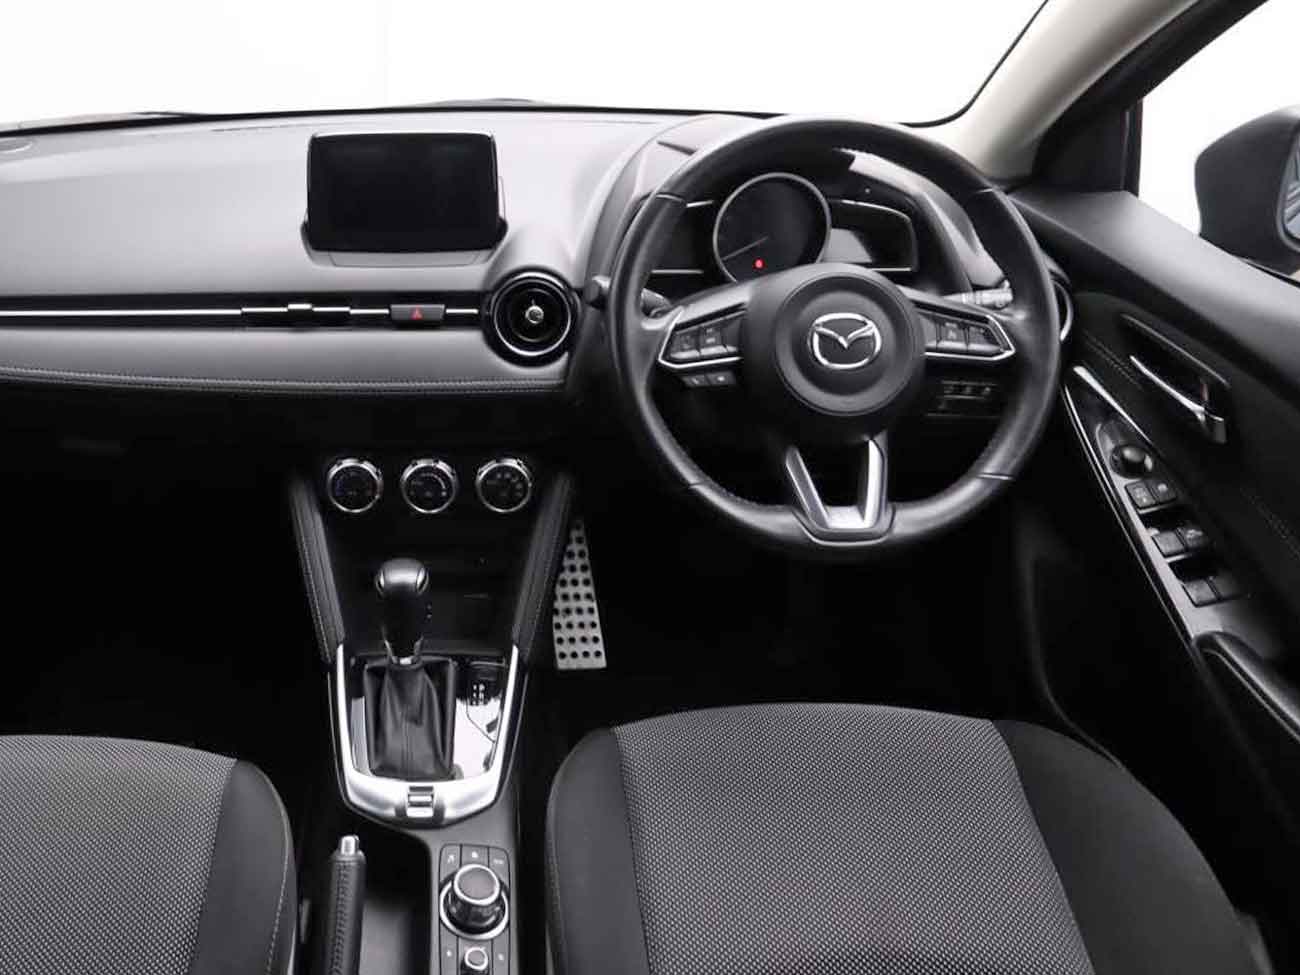 Interior view of Mazda 2